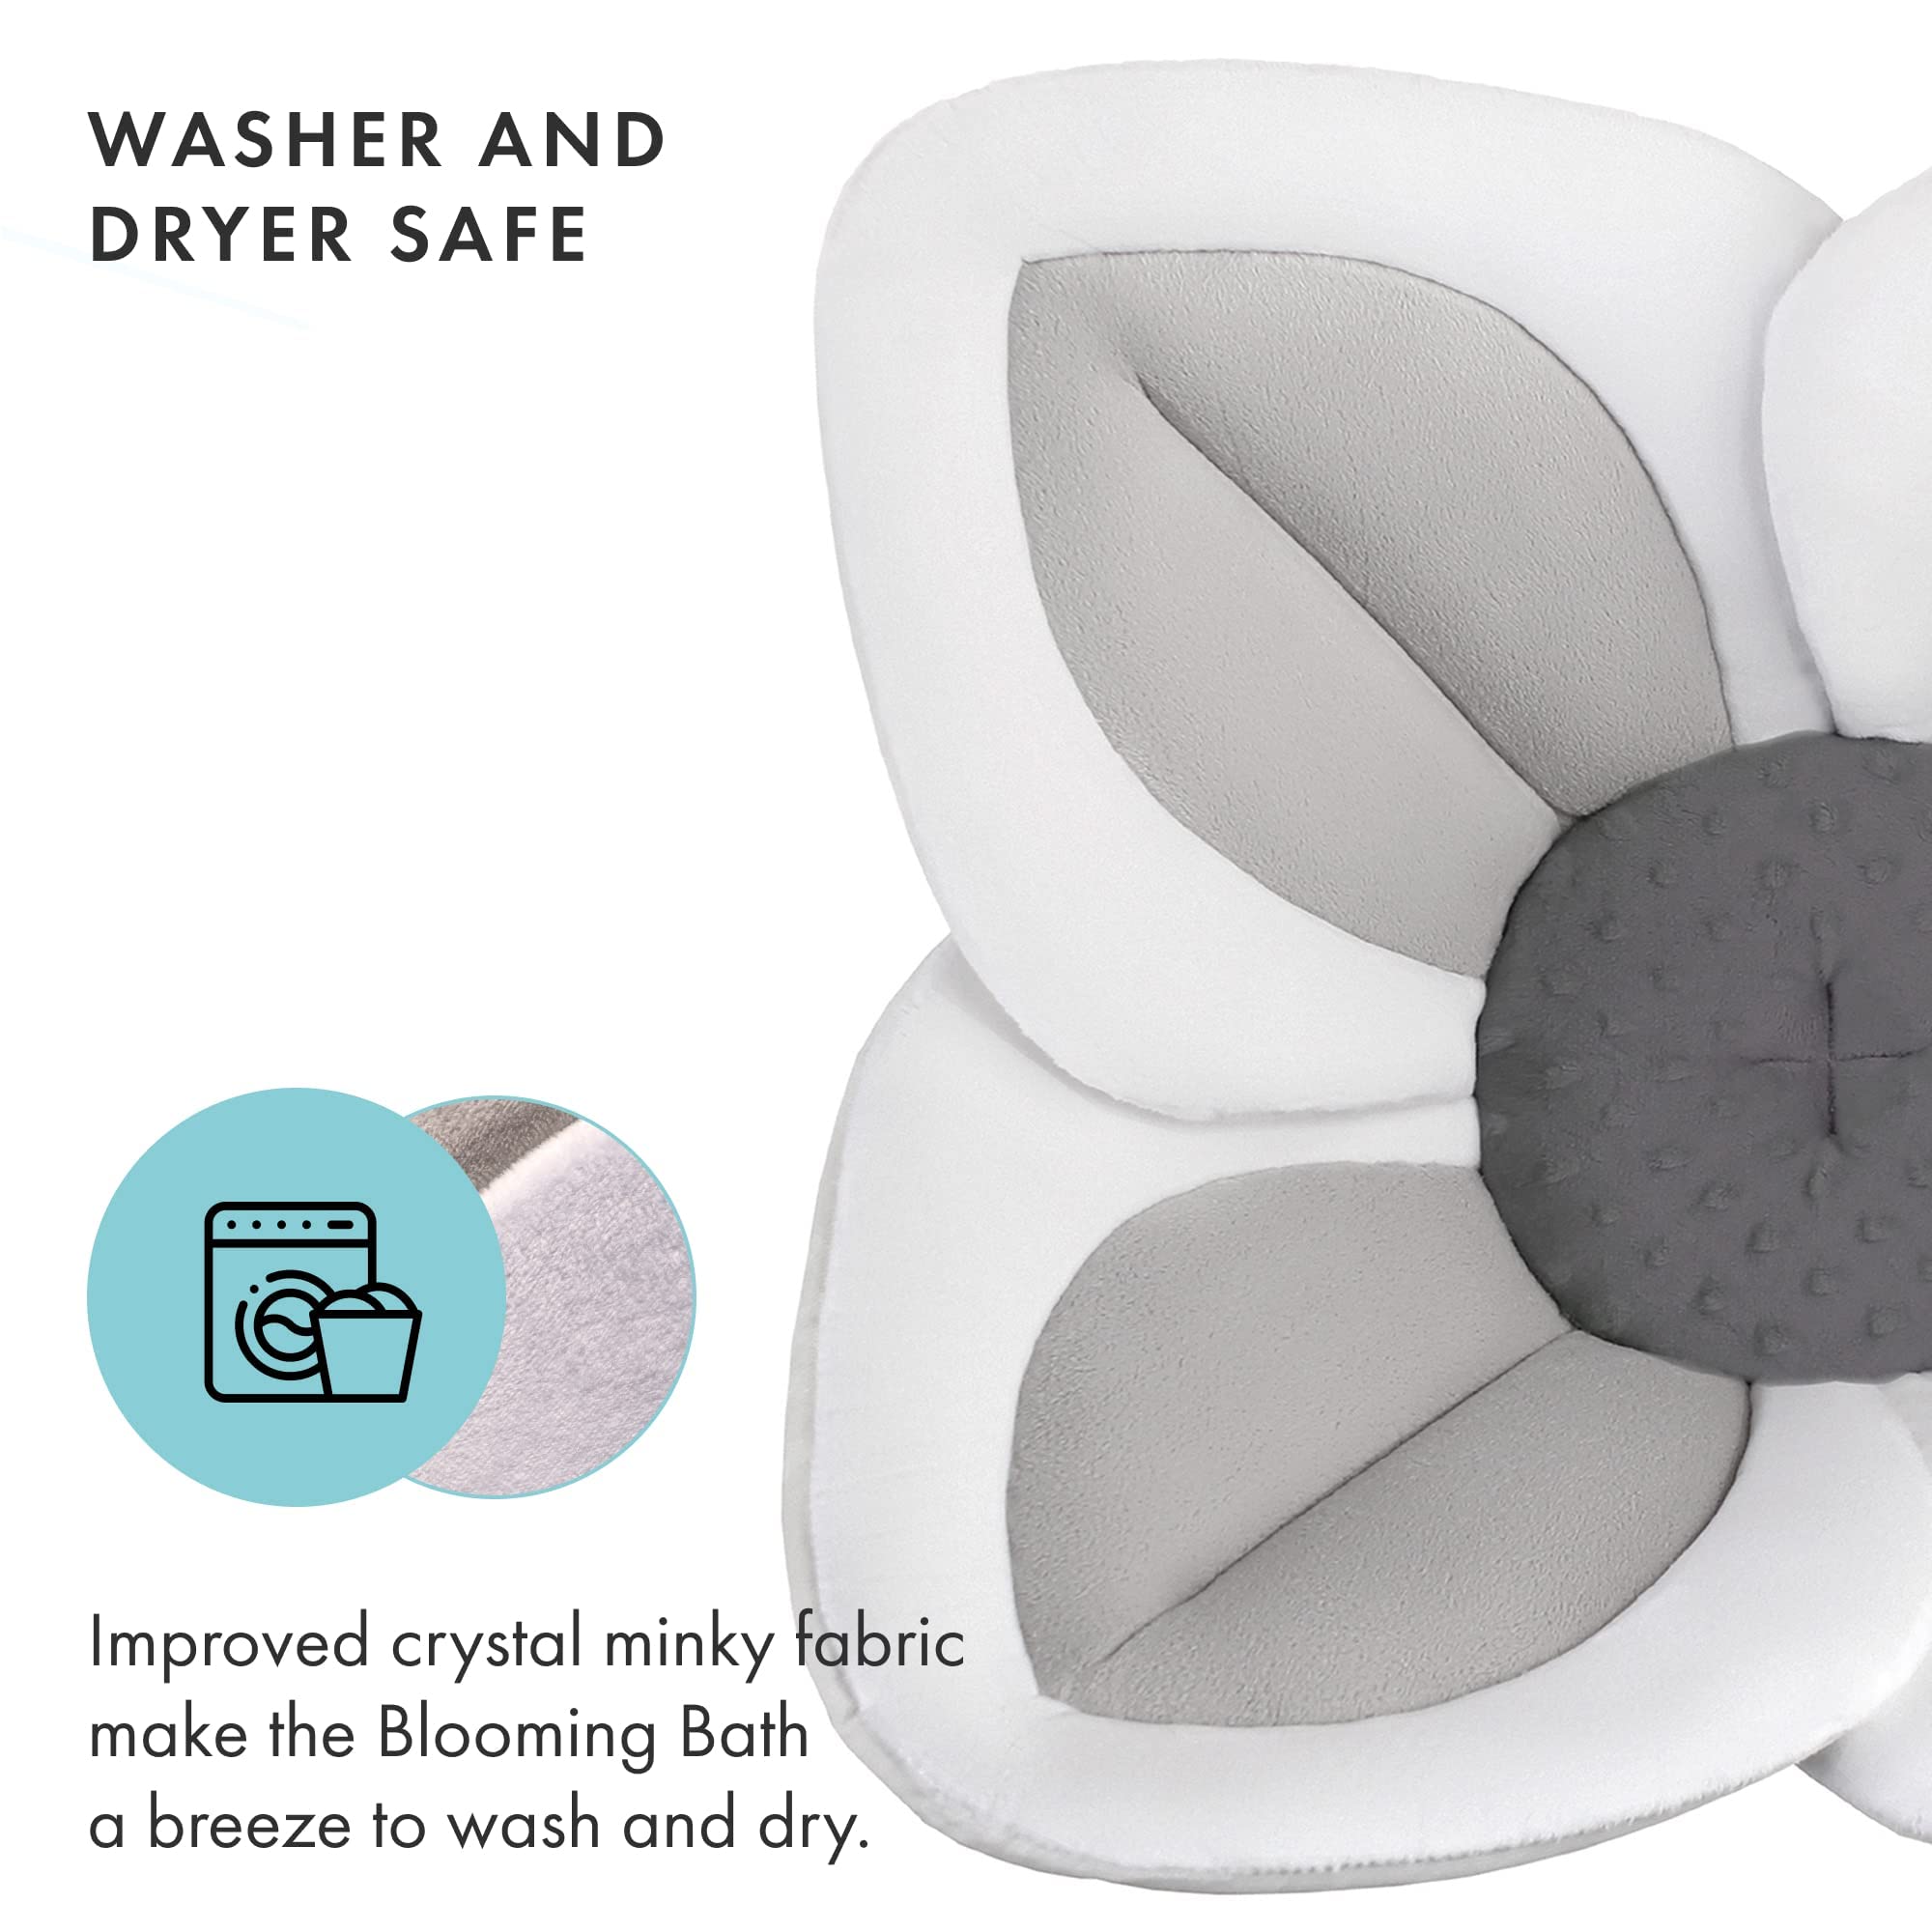 Blooming Bath Lotus Baby Bath Seat - Plush Minky Baby Sink Bathtub Cushion - The Original Washer-Safe Flower Seat for Newborns - Gray/Dark Gray